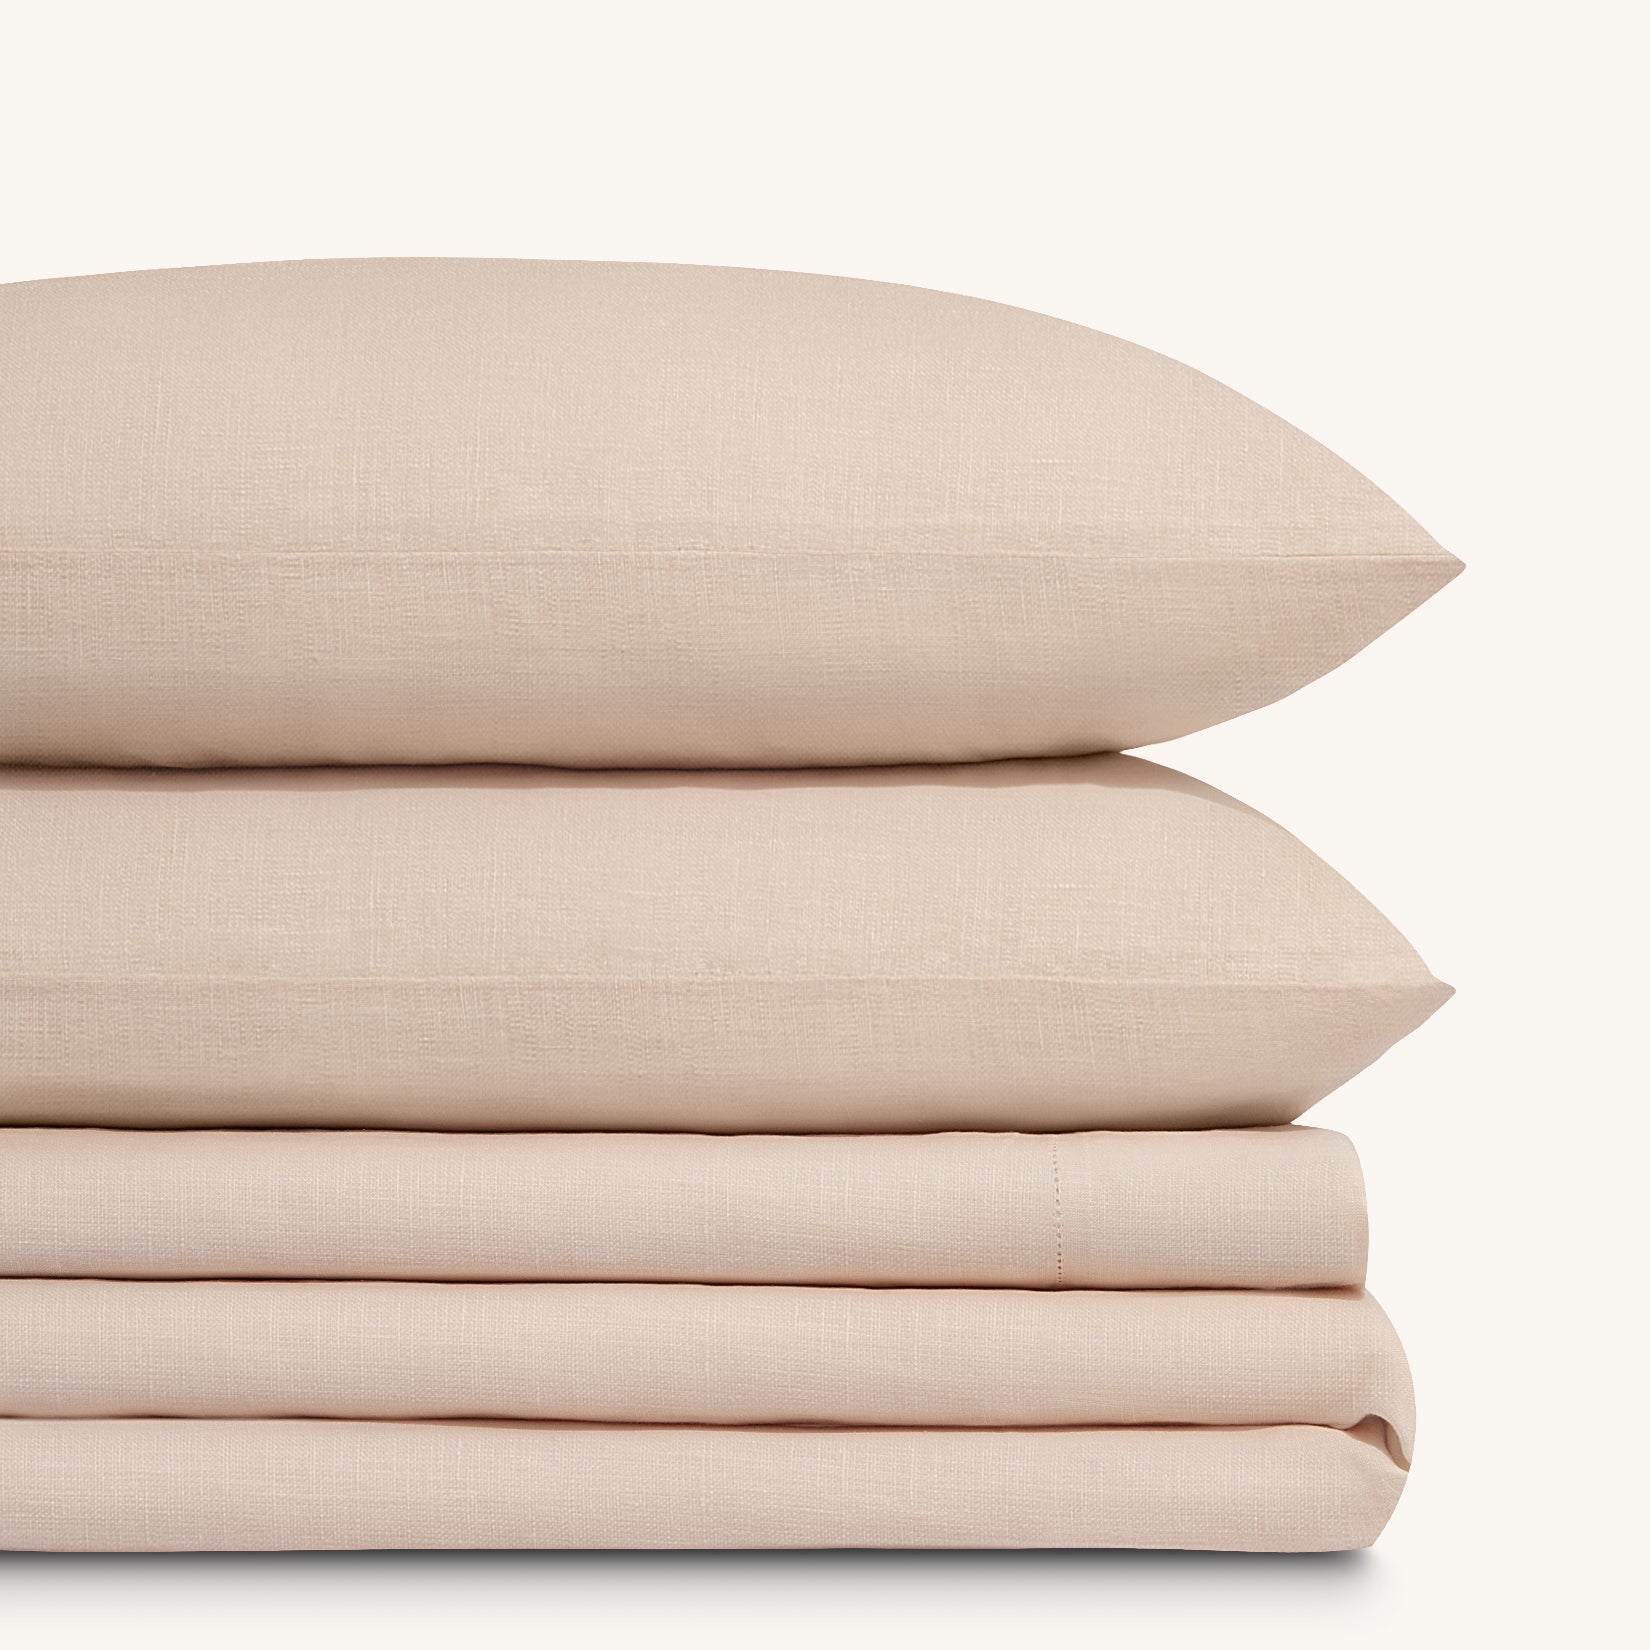 Olivia Blush linen bed sheet set. Two blush pink linen pillows stacked on folded blush pink linen sheet set.